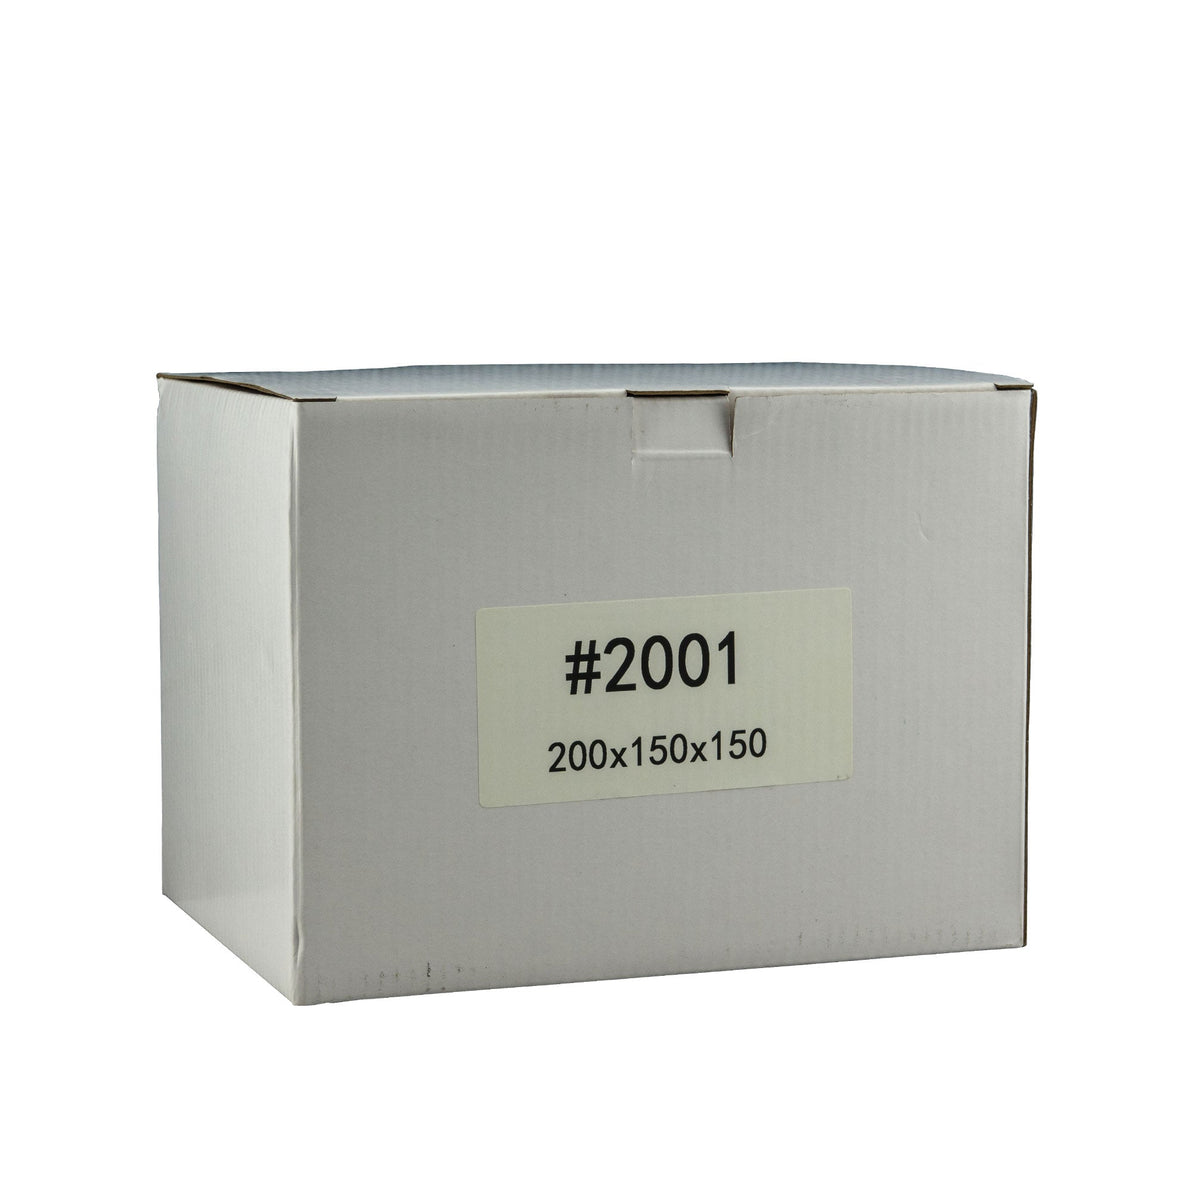 200mm x 150mm x 150mm White Carton Cardboard Shipping Box (#2001)